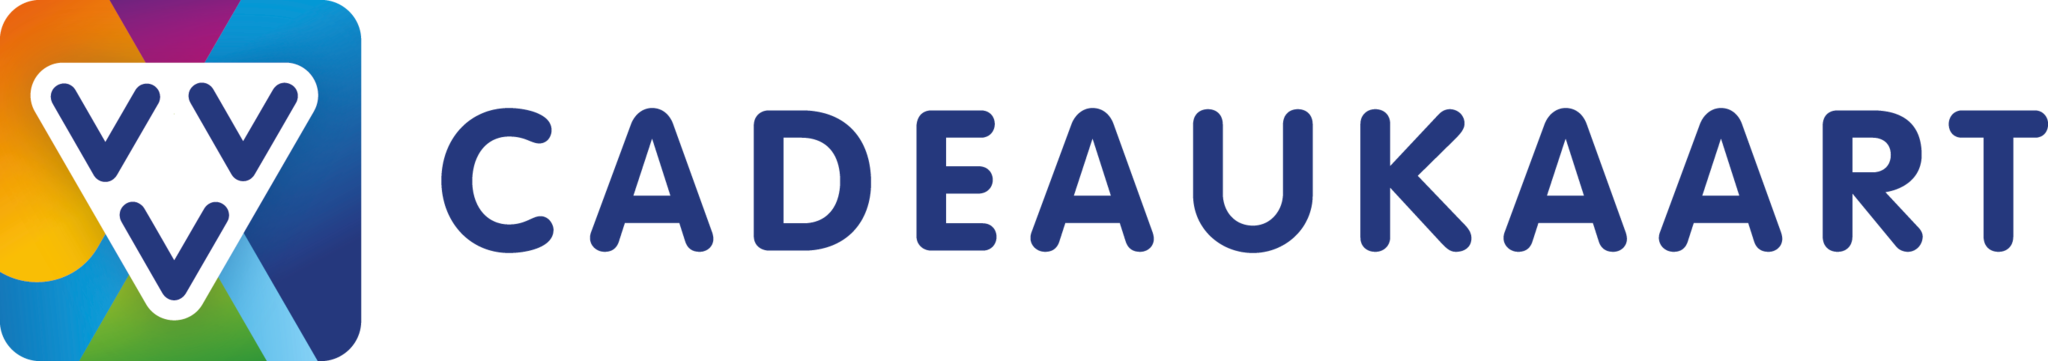 VVV-Cadeaukaart_betaalmethode_logo